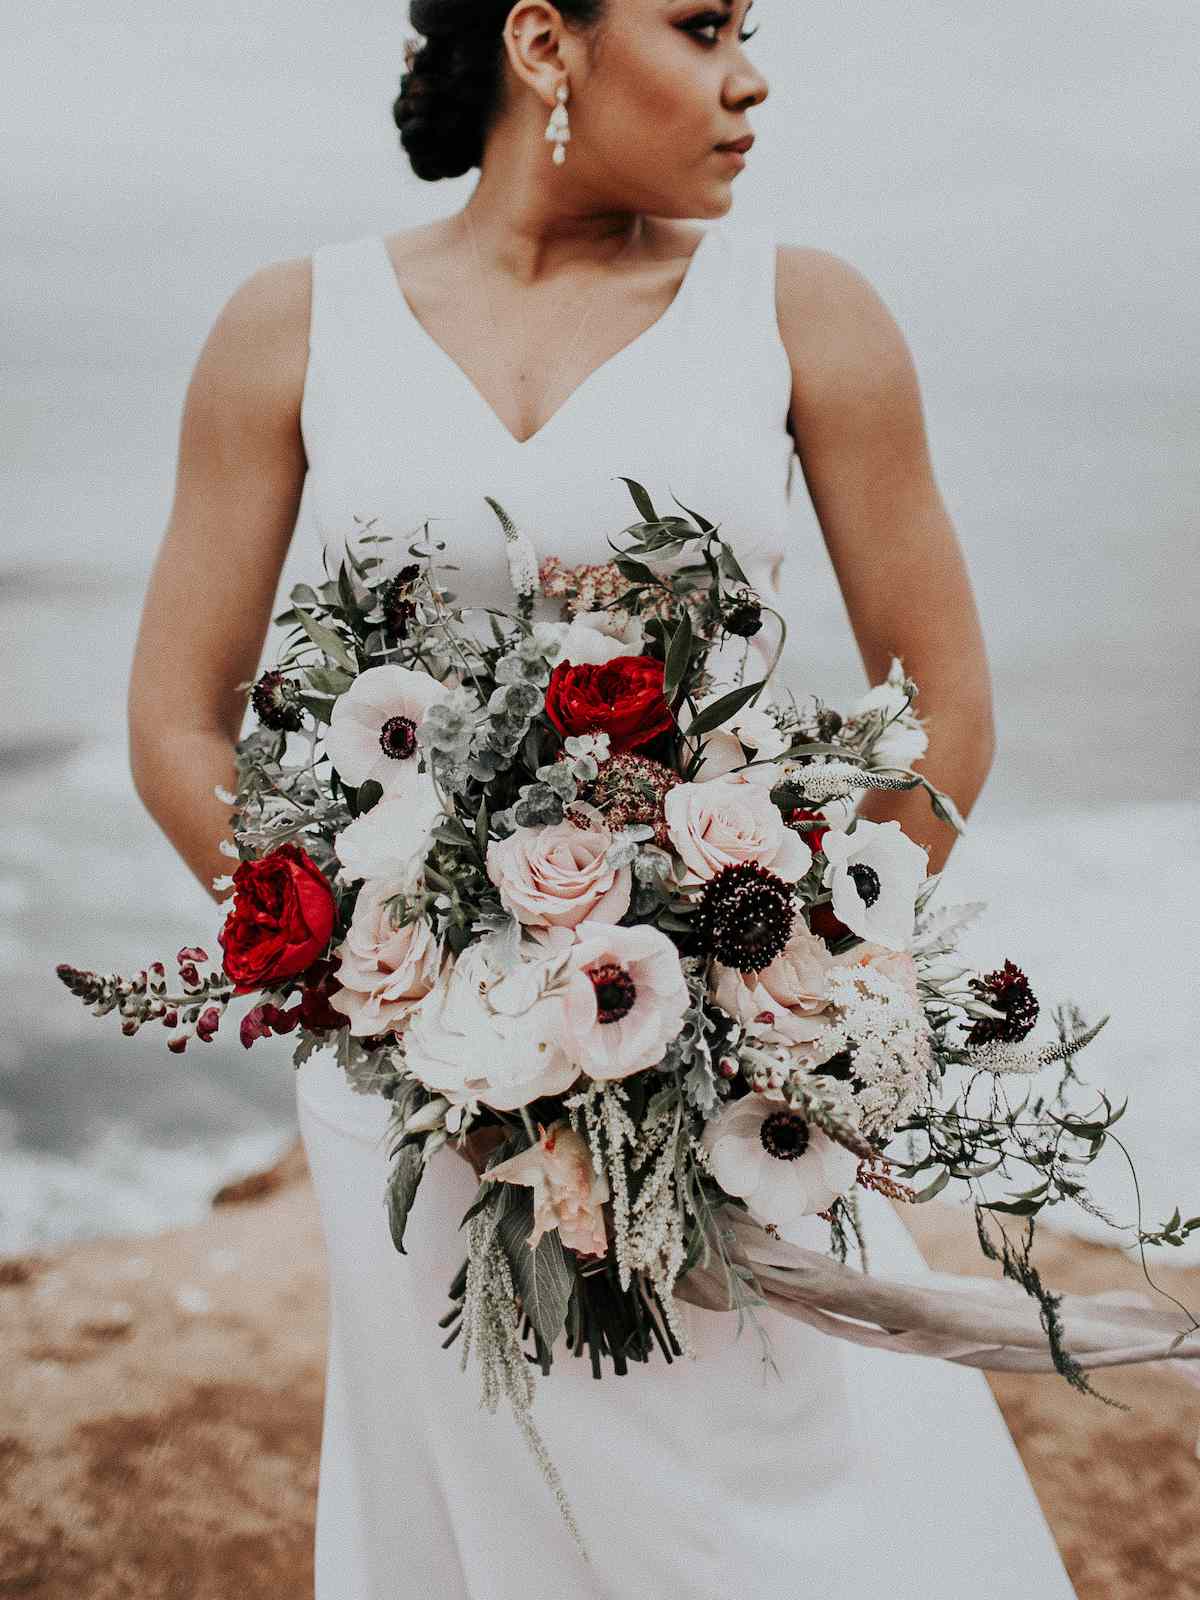 bride with bouquet